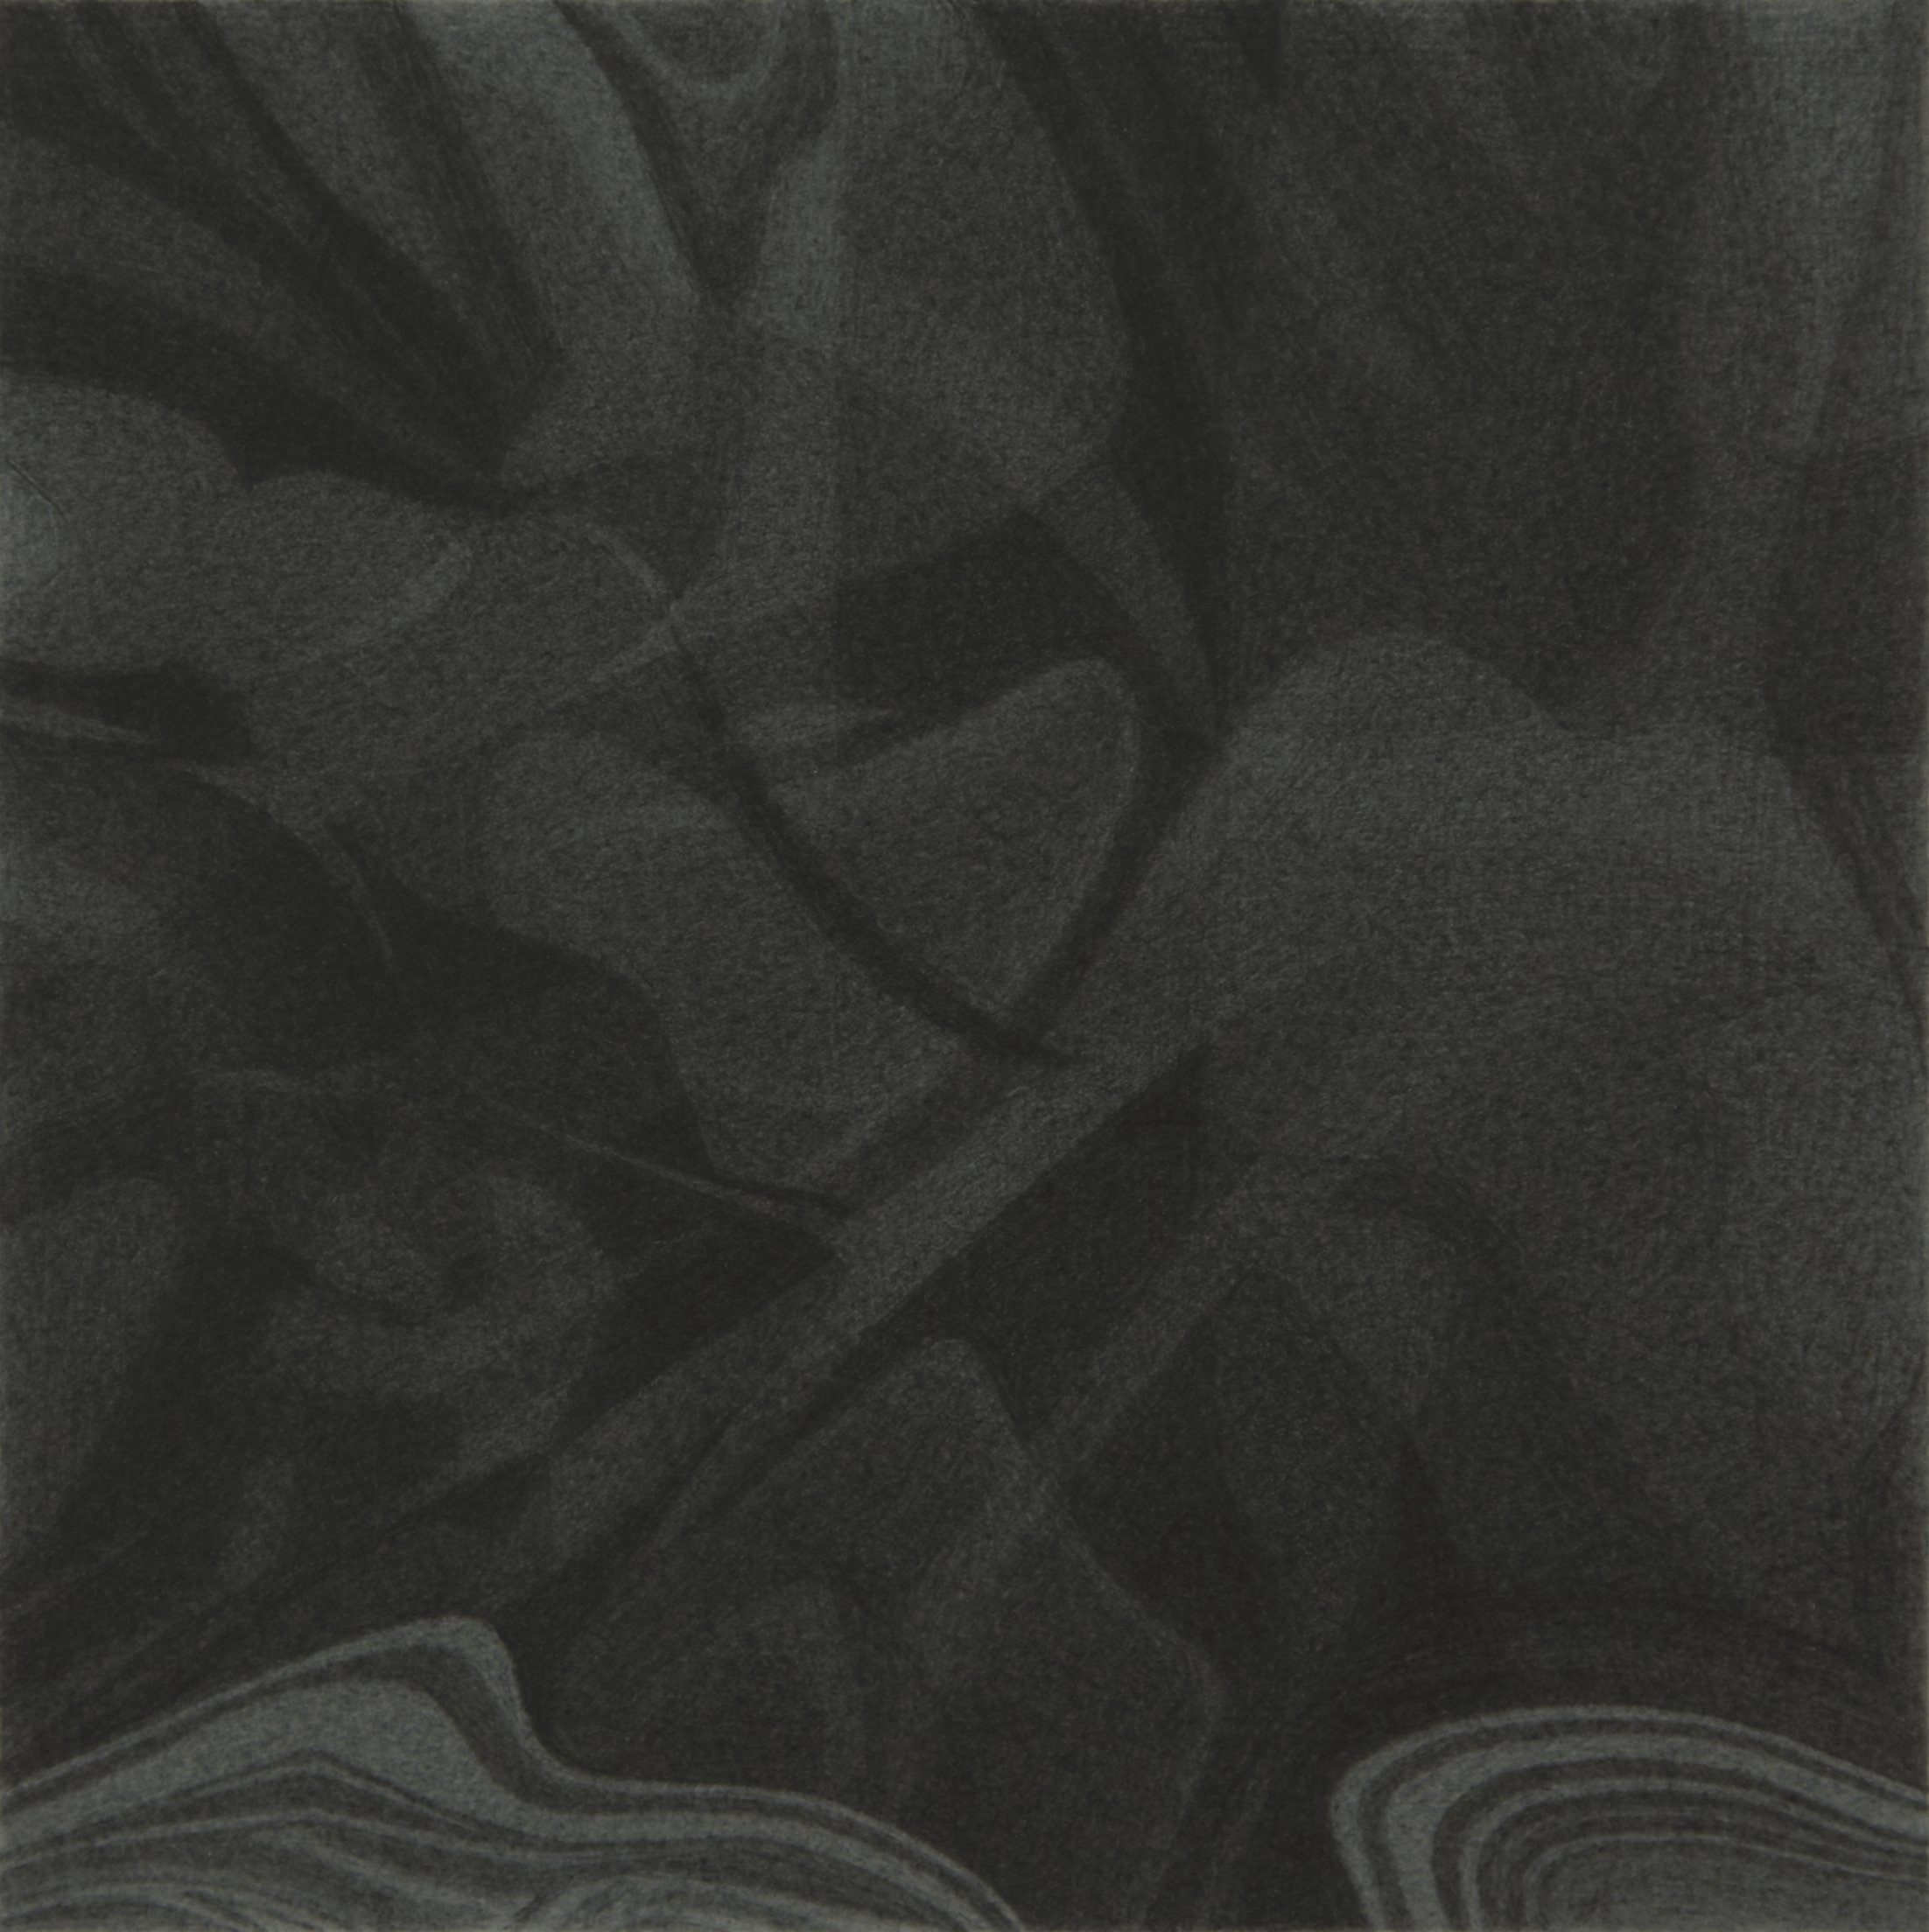  Portal  6x6”, graphite on paper, 2012   